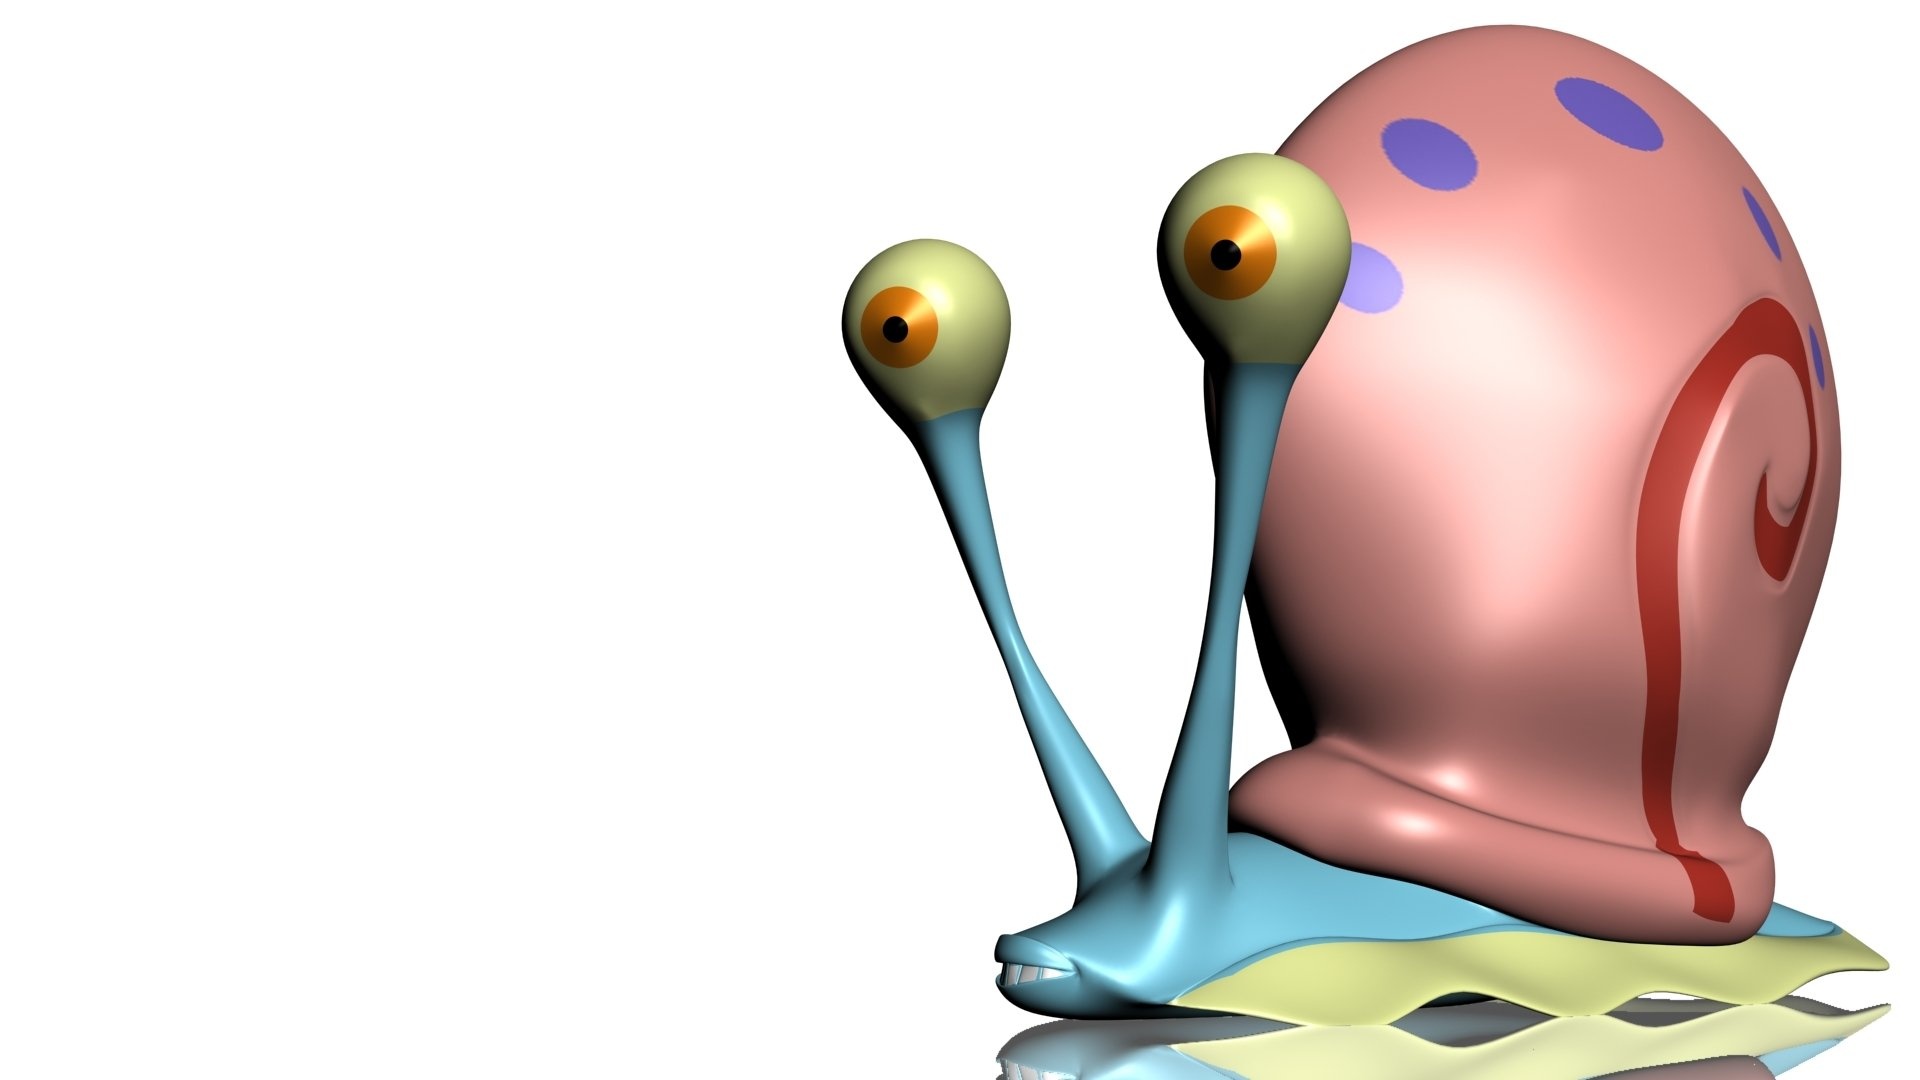 Gary the Snail, 3D model, Animated character, 1920x1080 Full HD Desktop